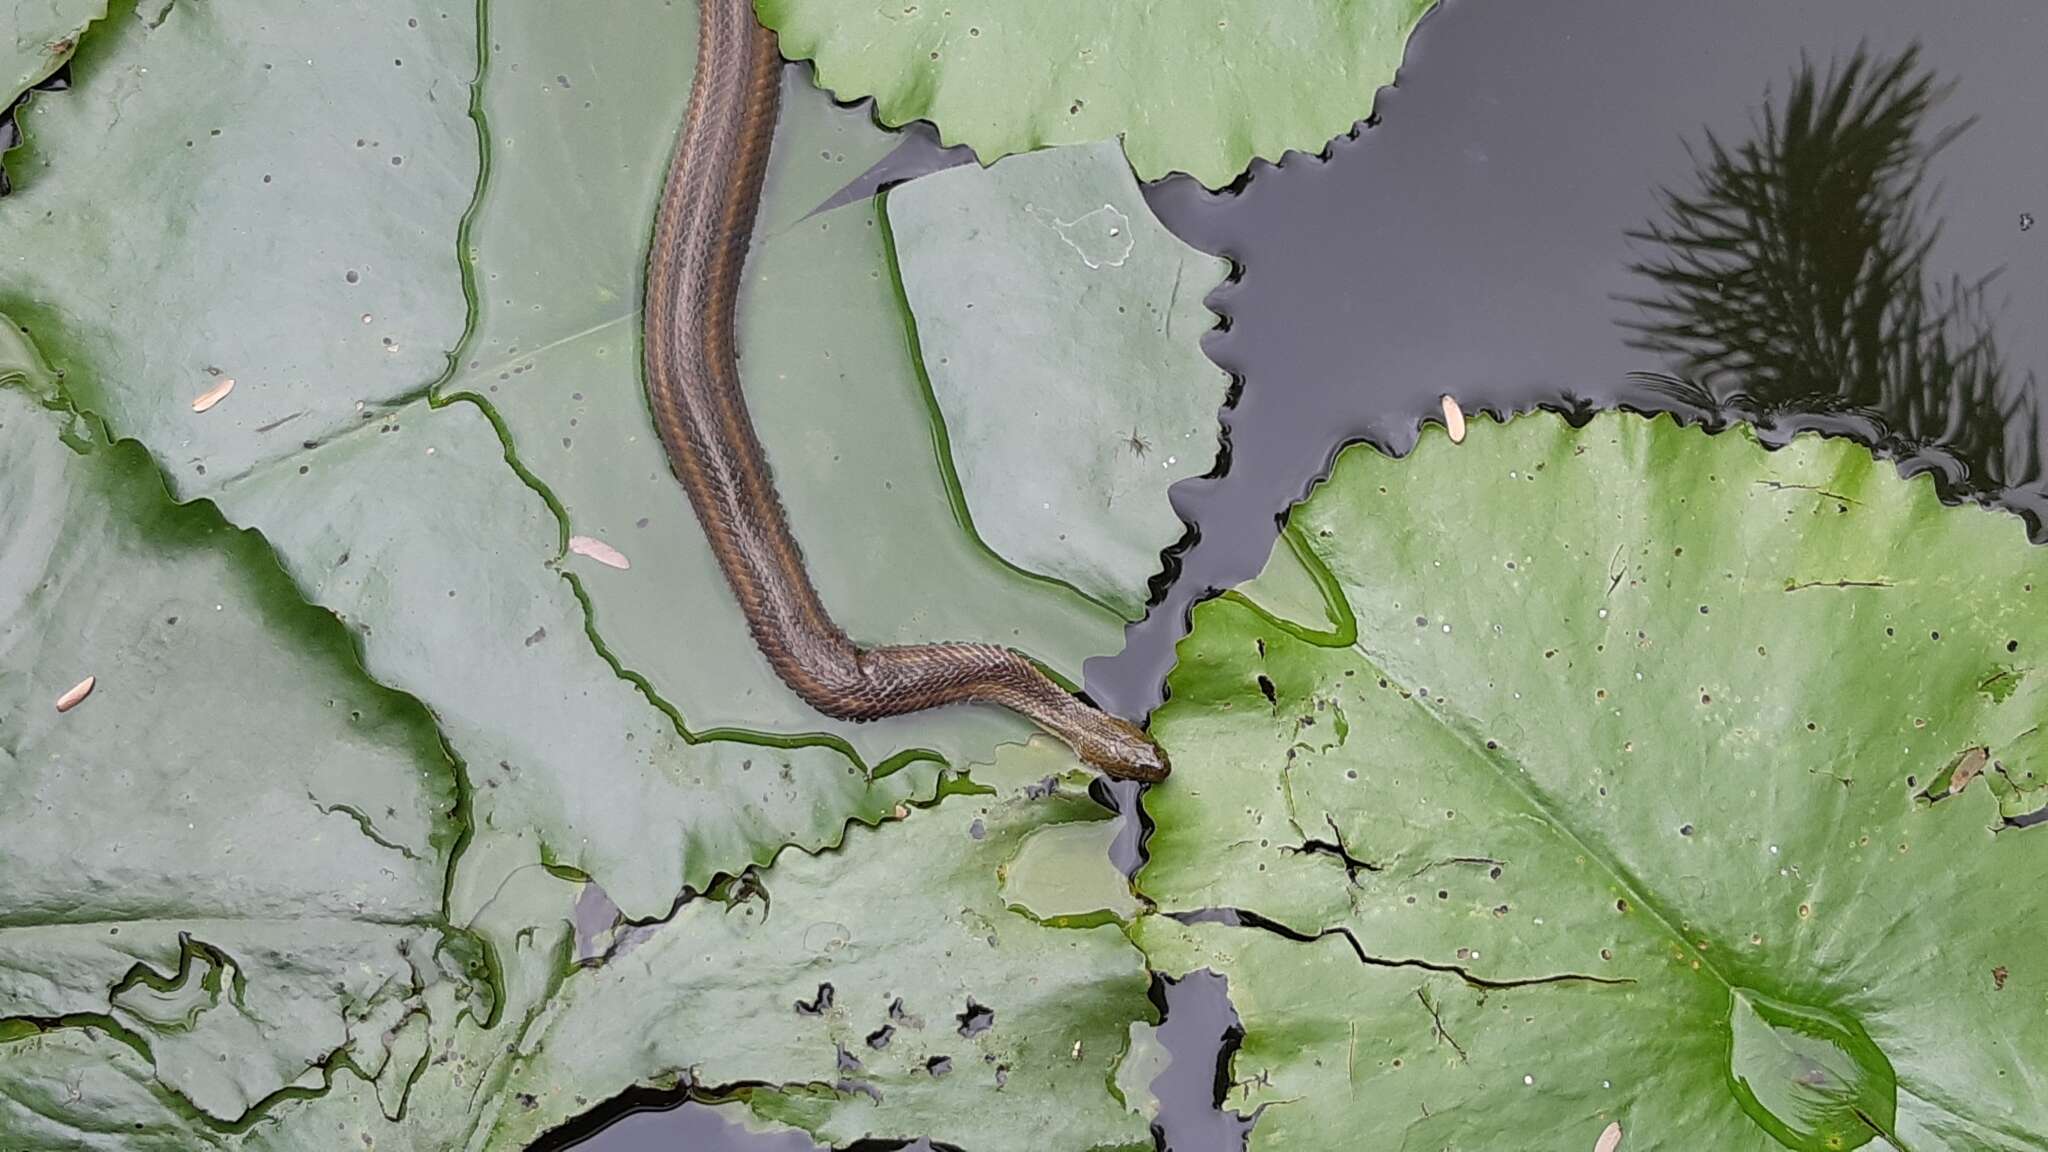 Image of Rainbow Mud Snake